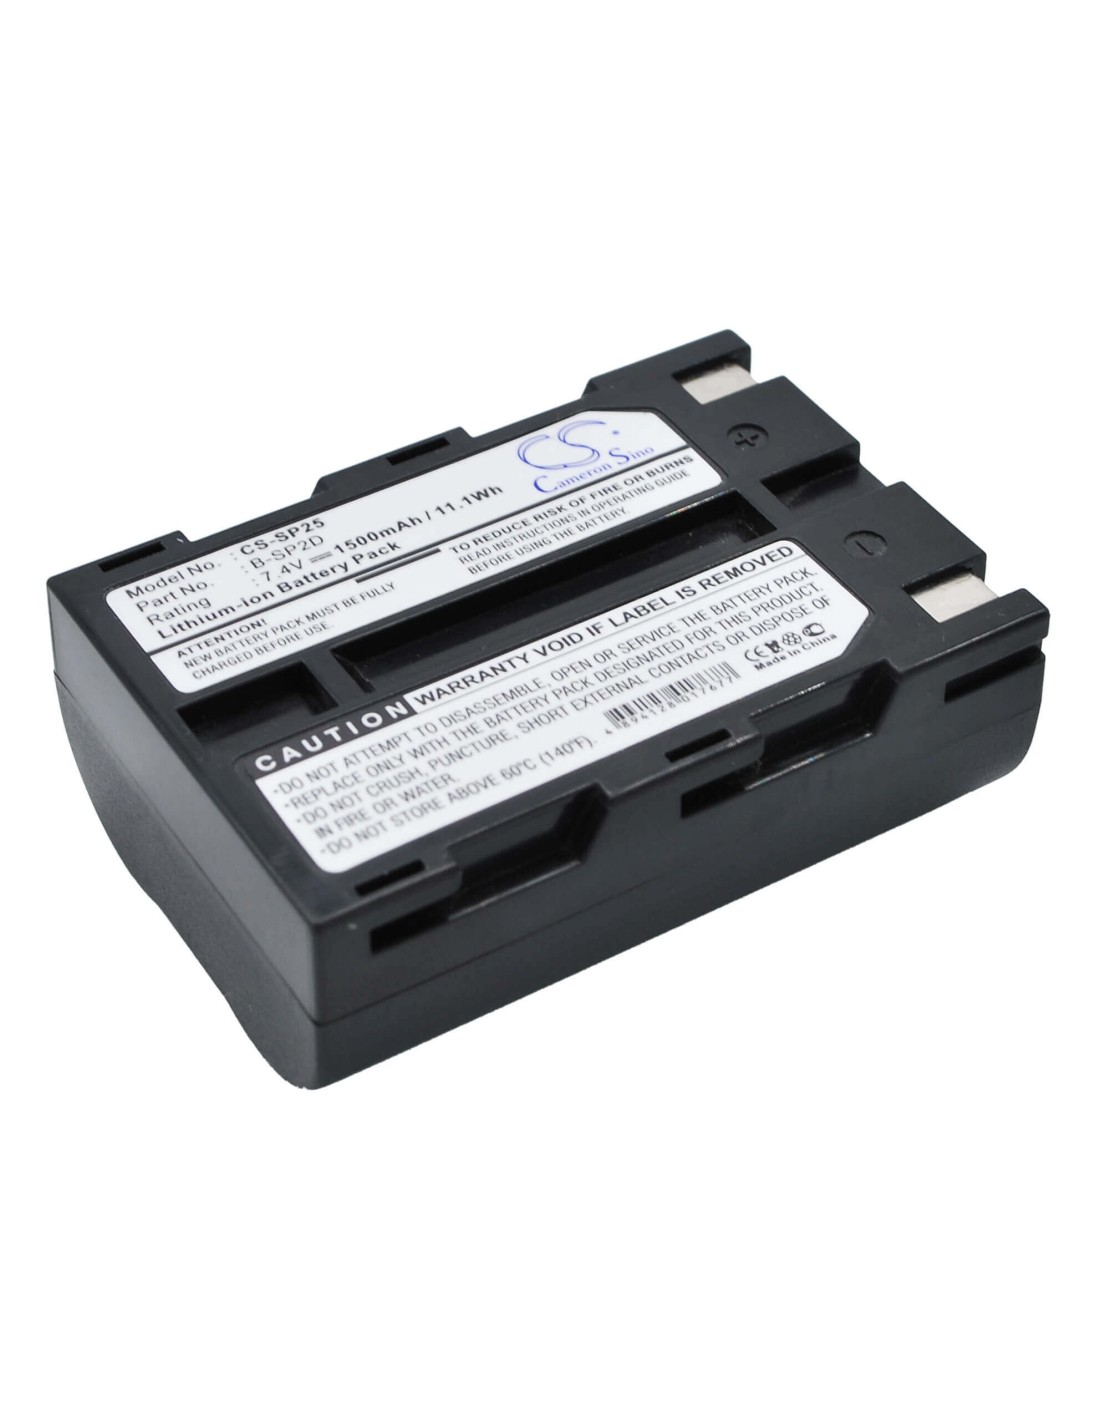 Battery for Canon Canoscan 8400f Scanner 7.4V, 1500mAh - 11.10Wh